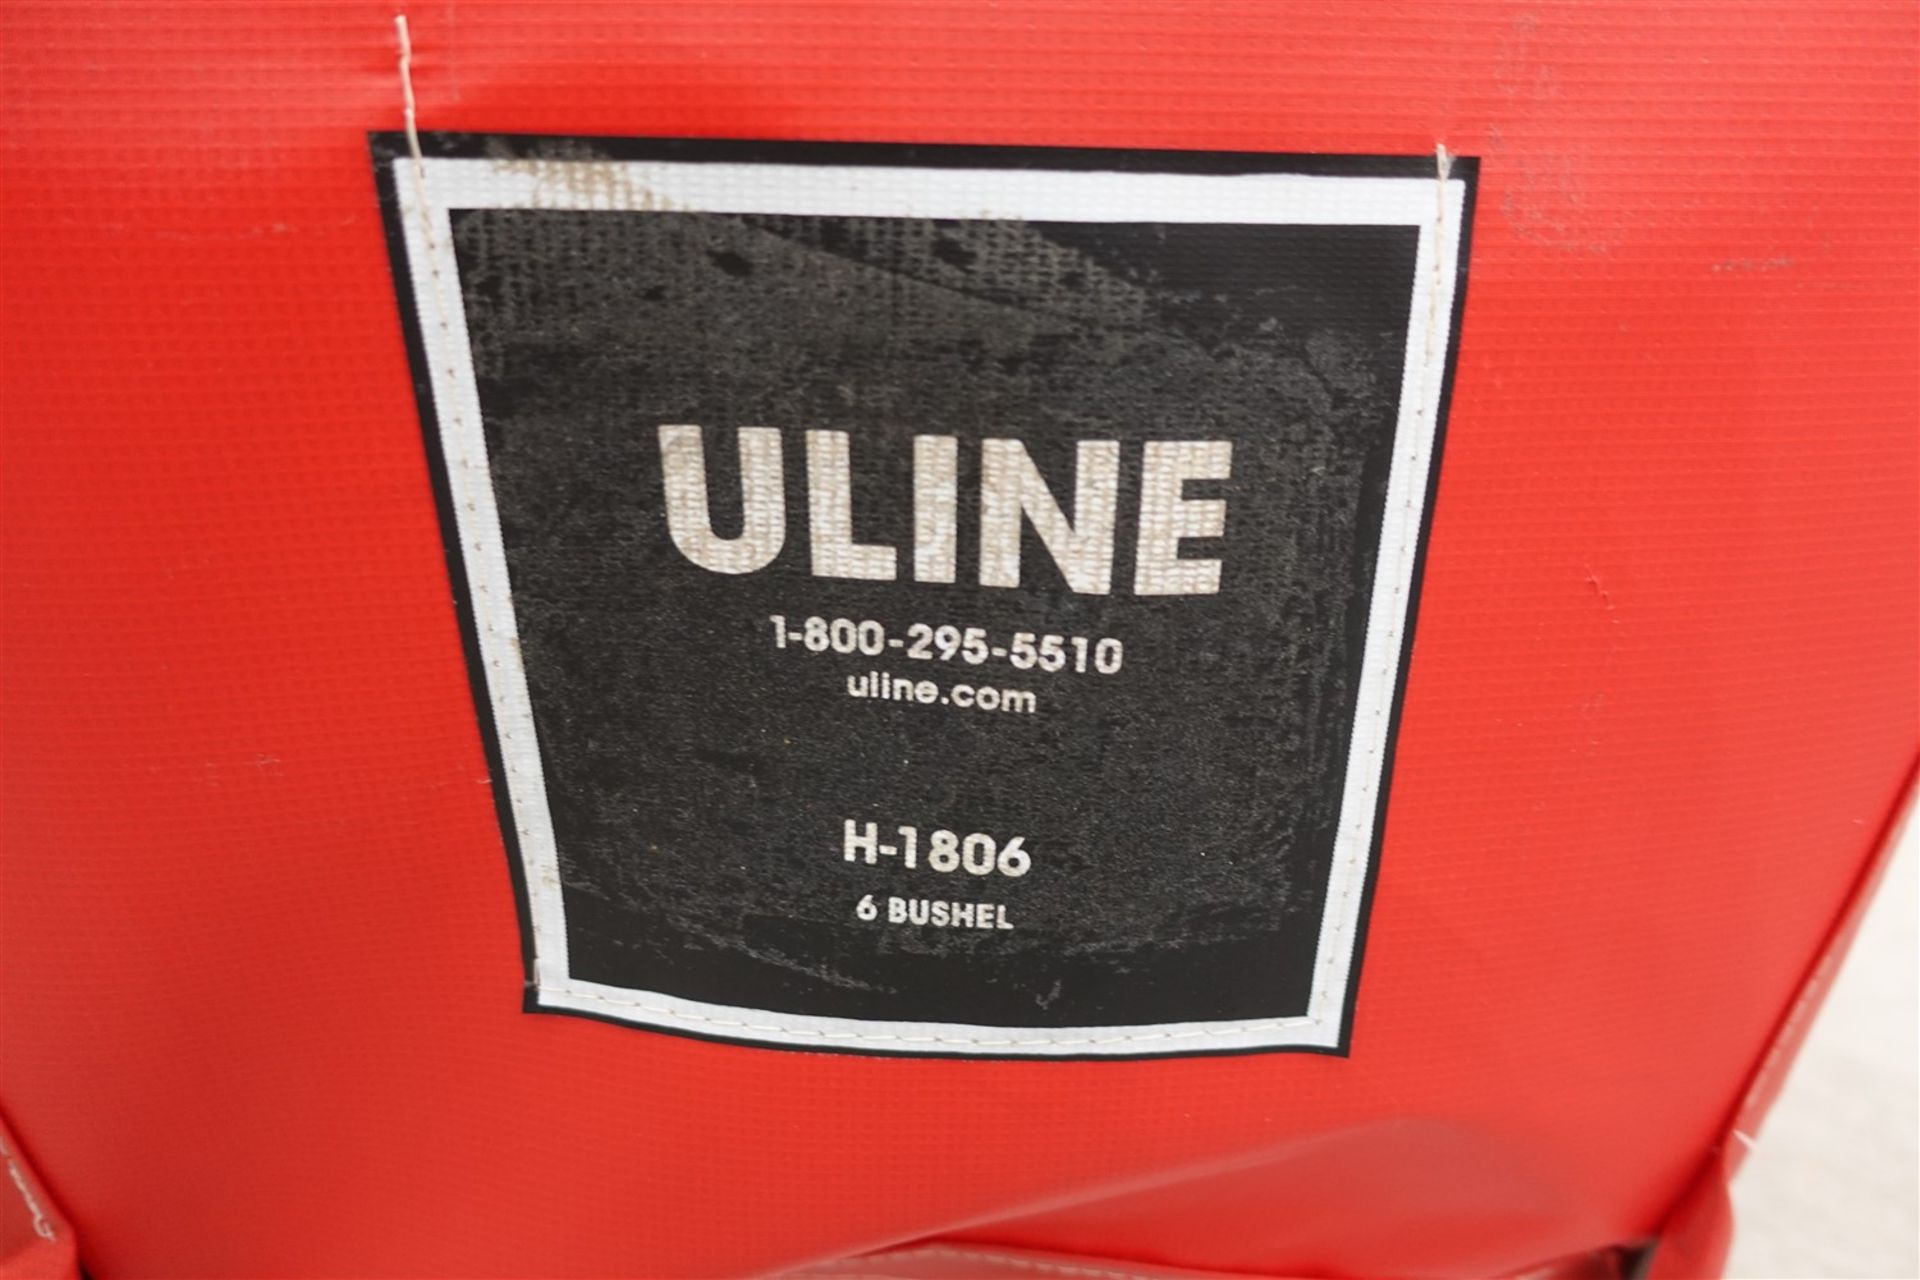 ULINE RED VINYL BASKET TRUCK, 6 BUSHEL, 20 IN. X 30 IN. MOD. H-1806 - Image 2 of 2